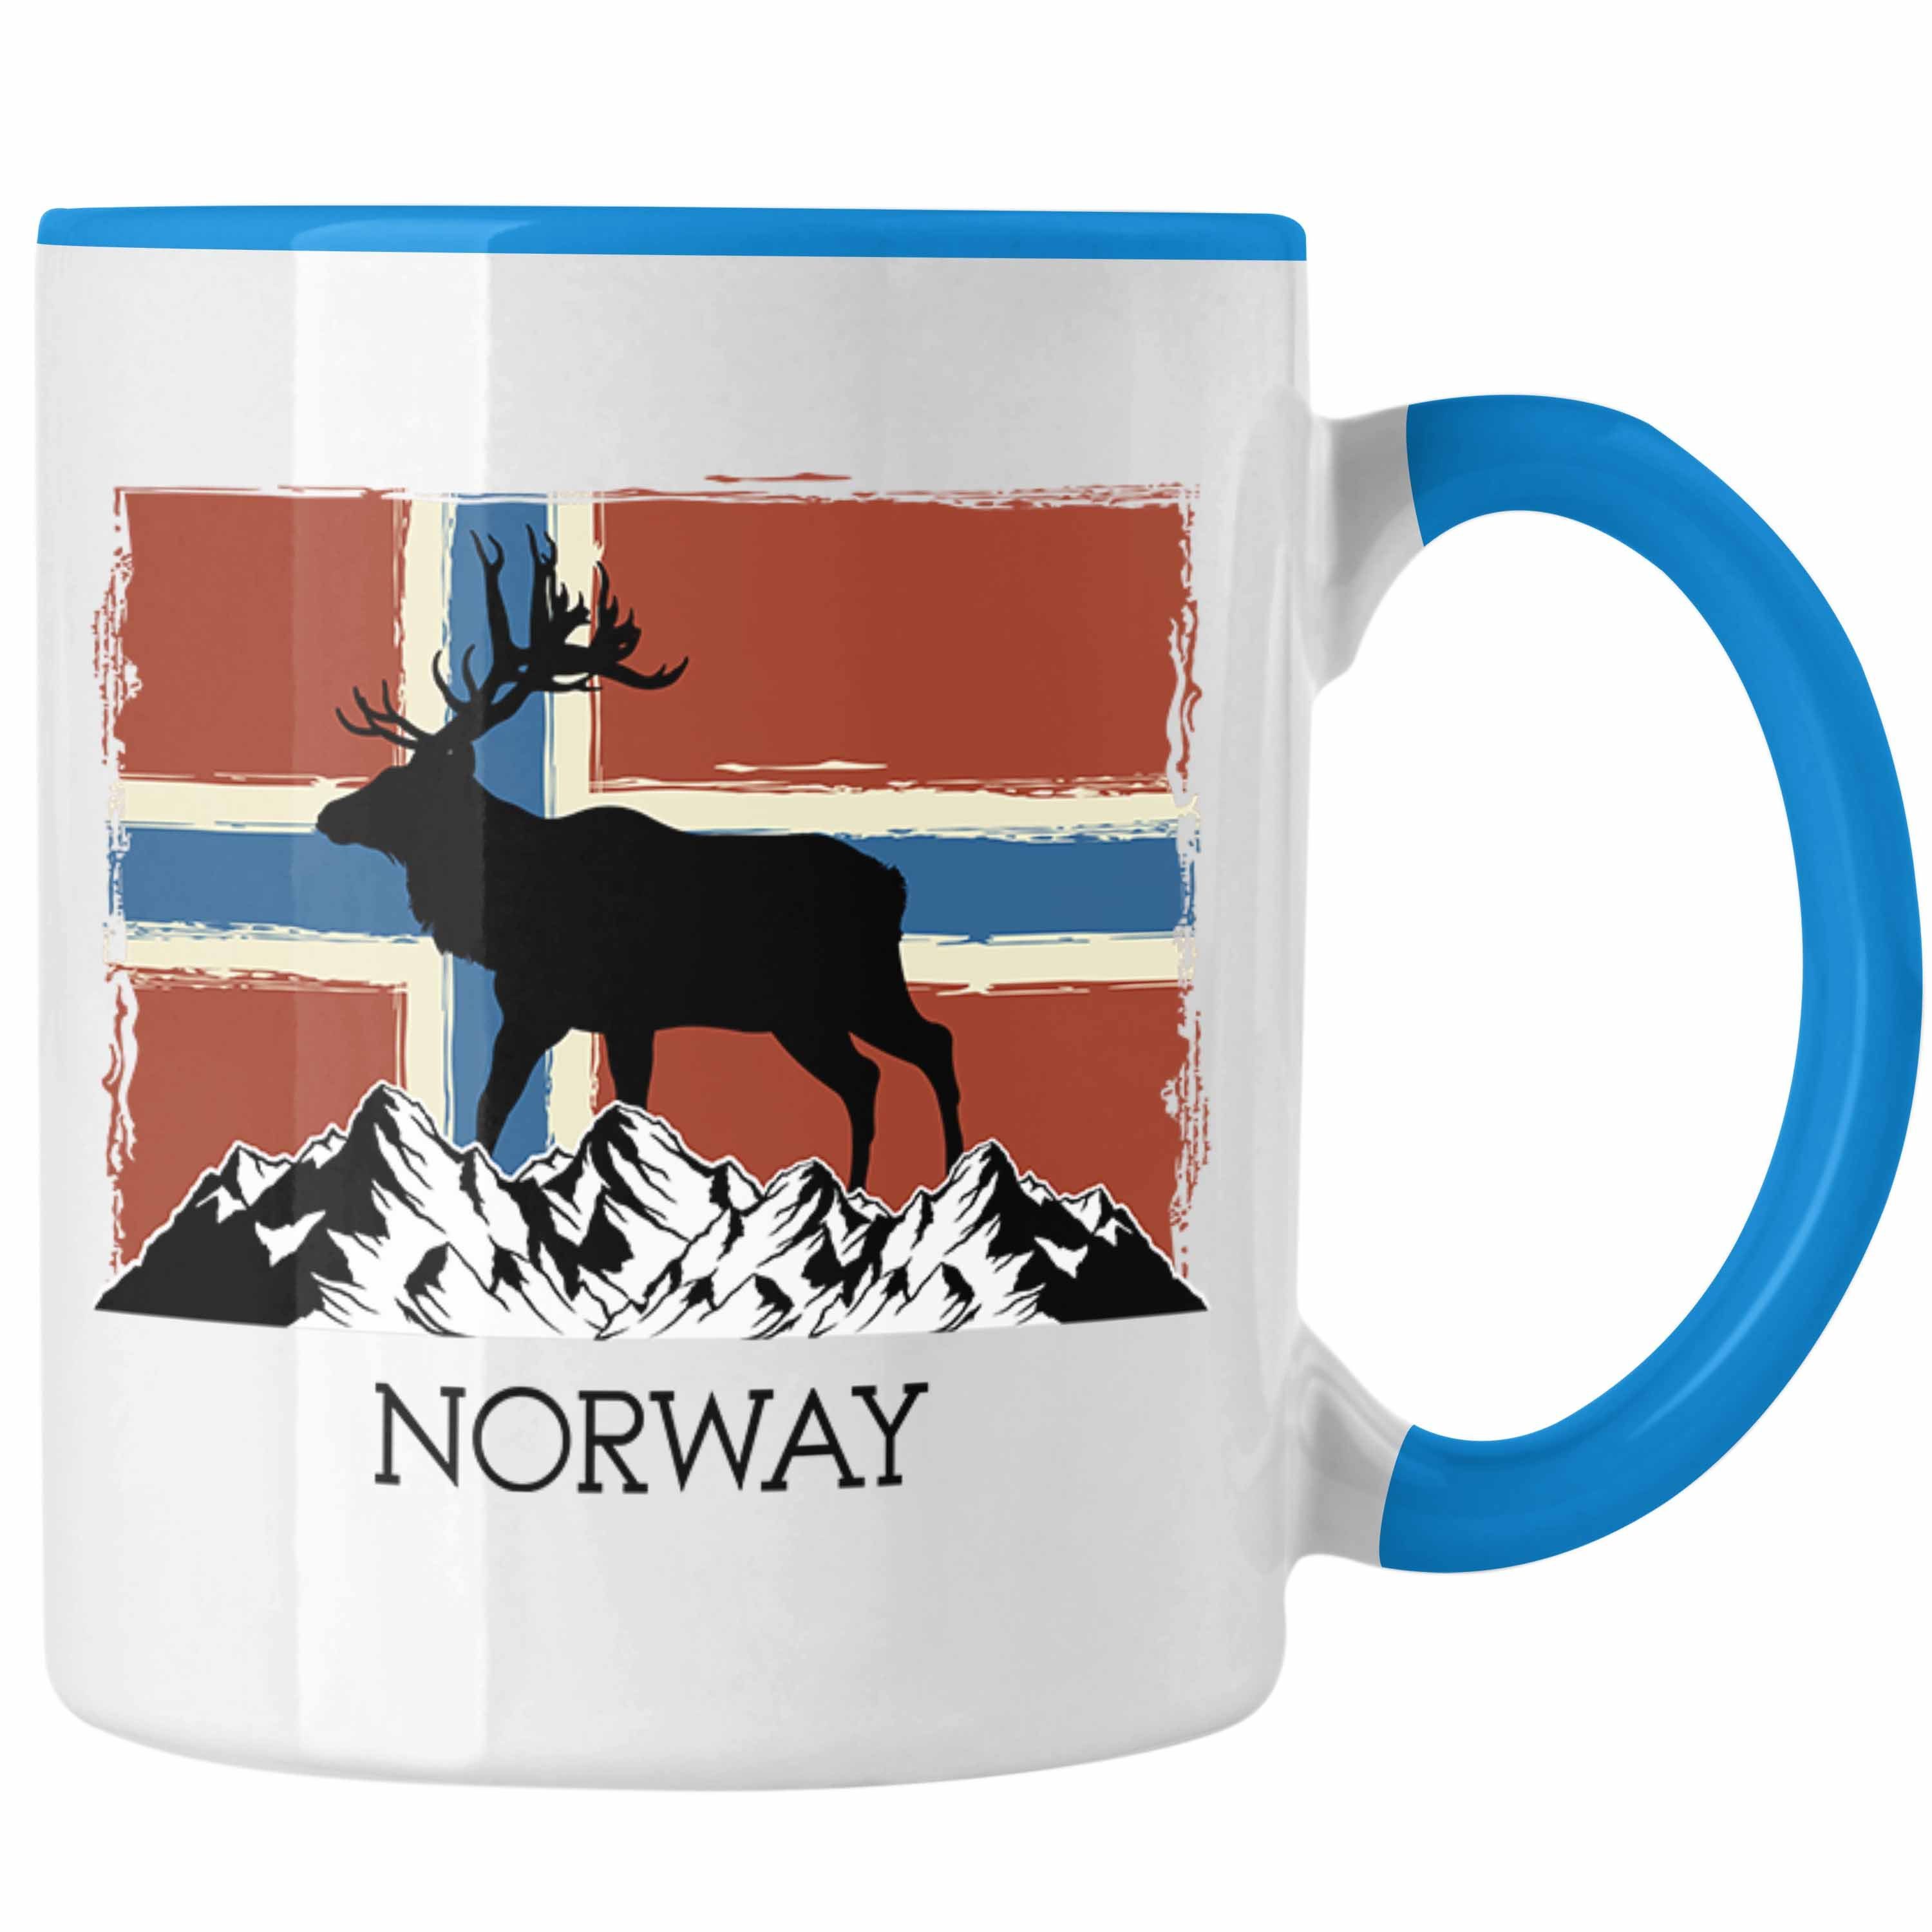 Trendation Tasse Trendation - Norwegen Geschenke Tasse Flagge Nordkap Elch Norway Blau